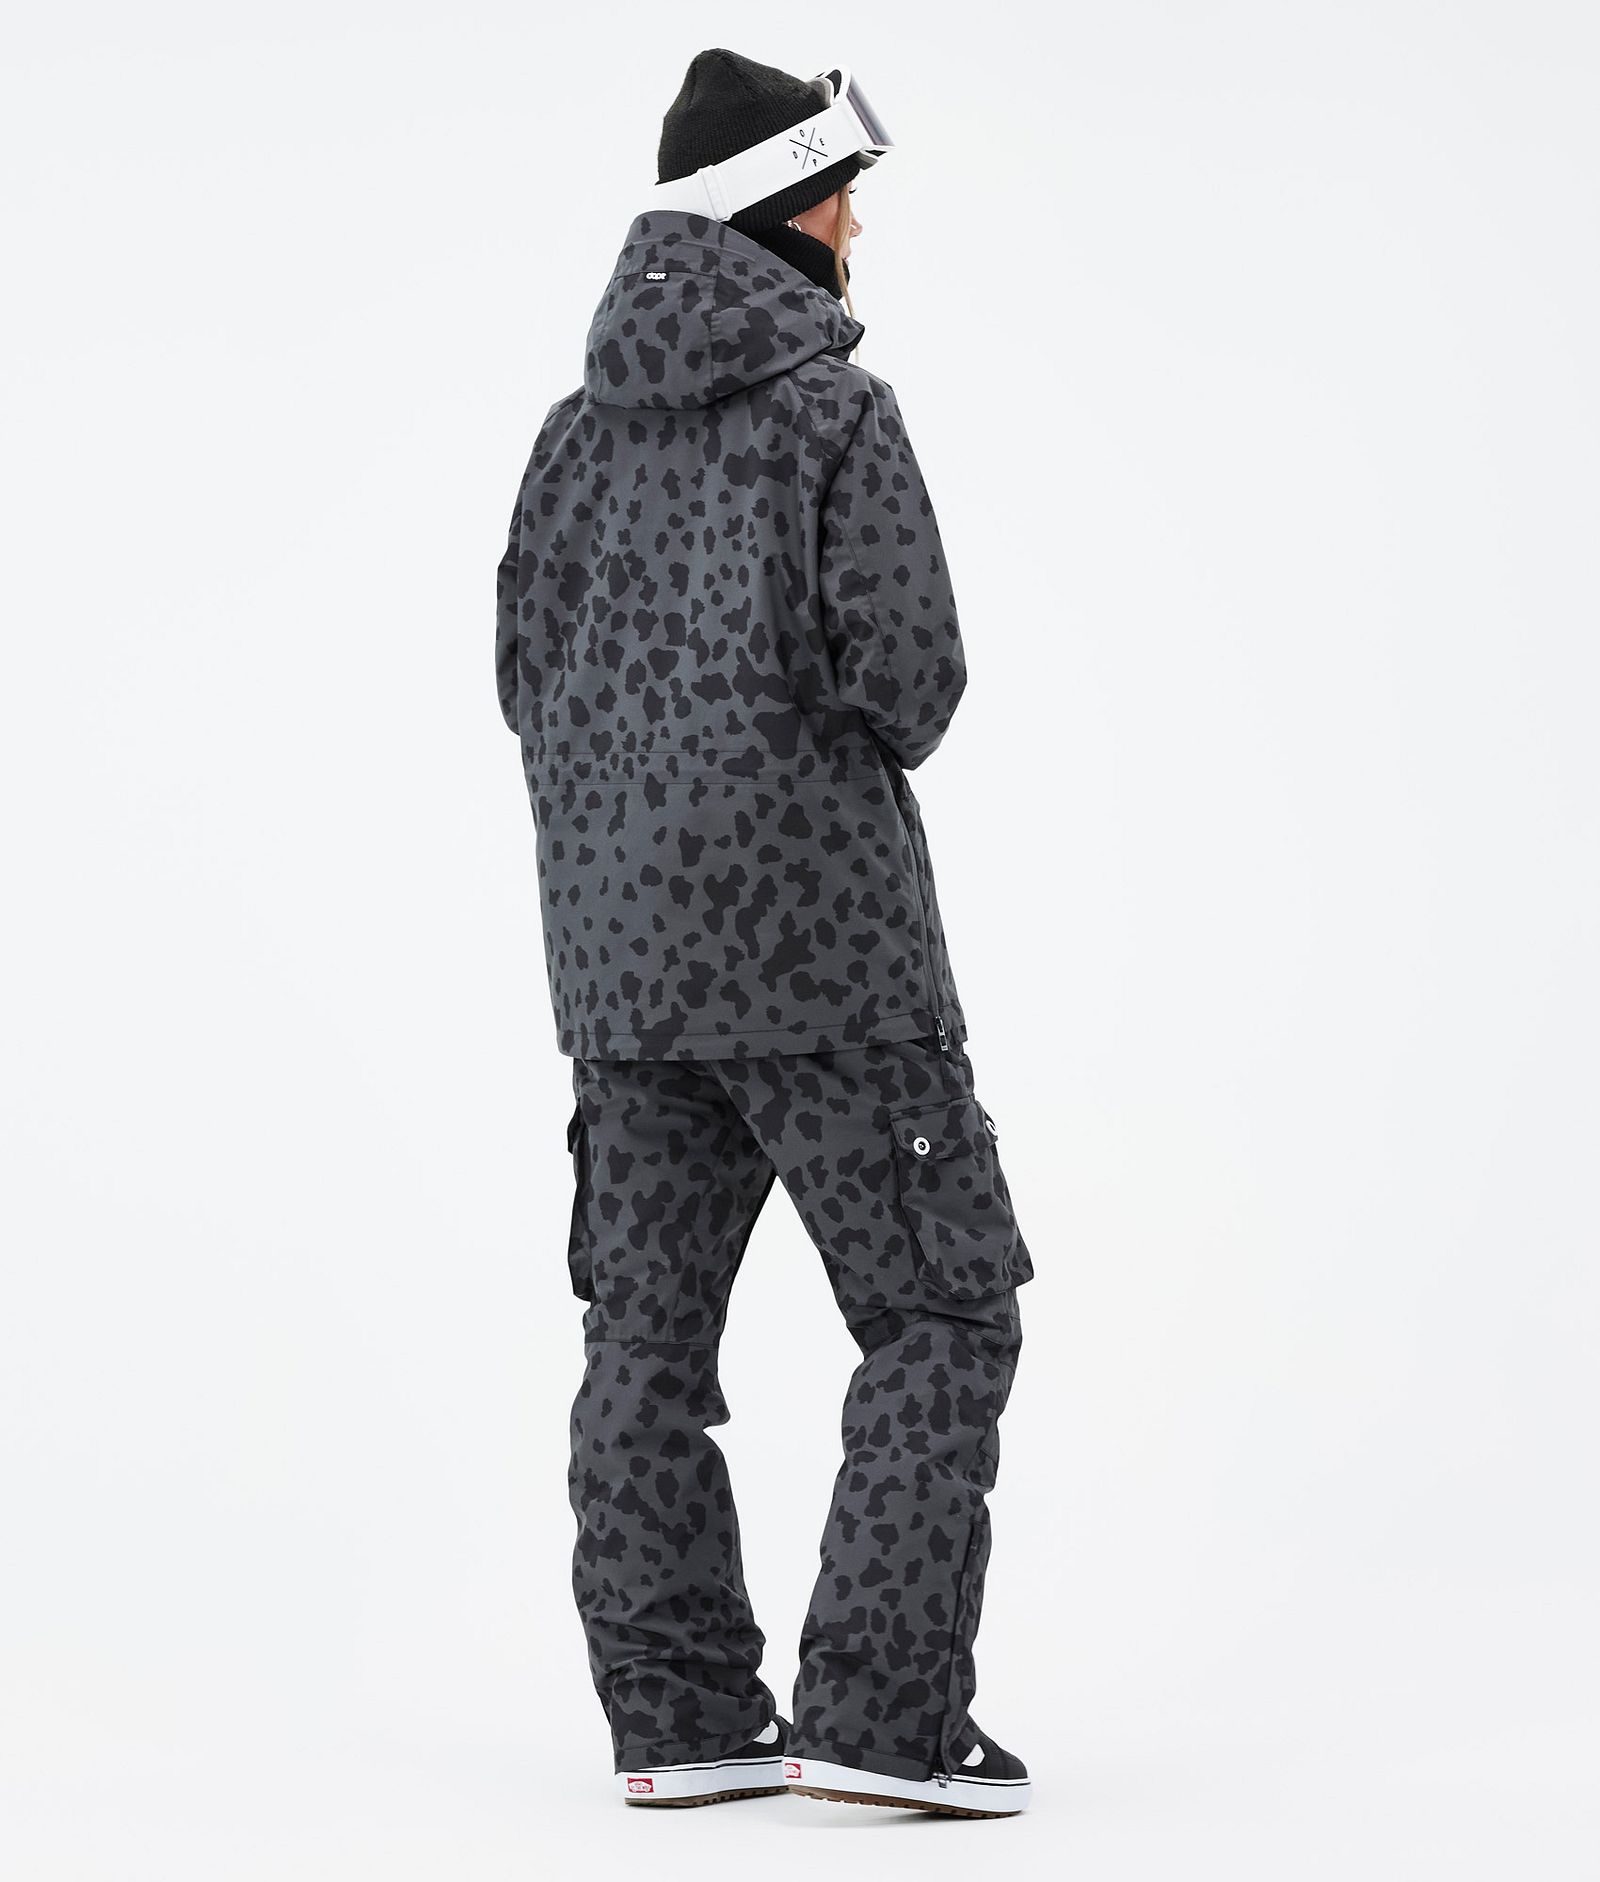 Annok W Snowboard Outfit Damen Dots Phantom